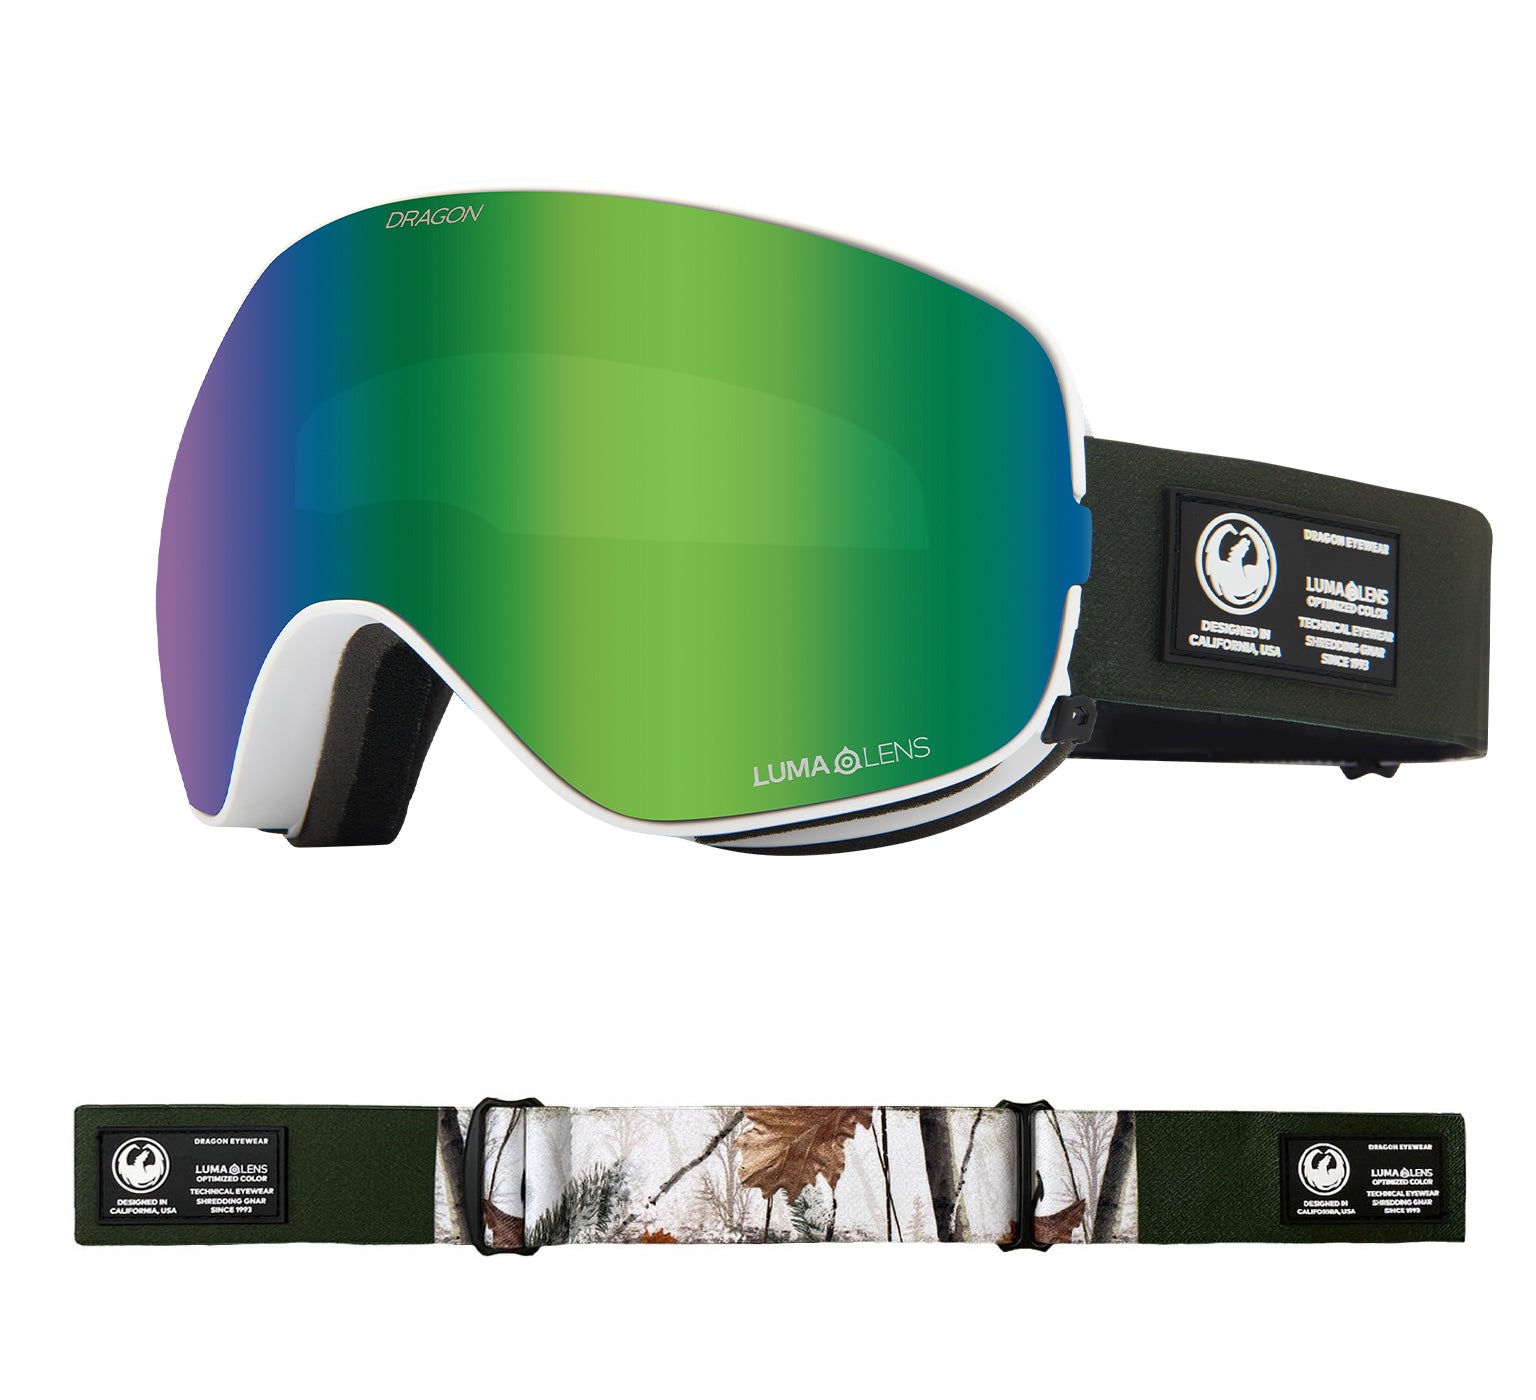 X2s - Alpine Camo with Lumalens Green Ionized & Lumalens Amber Lens